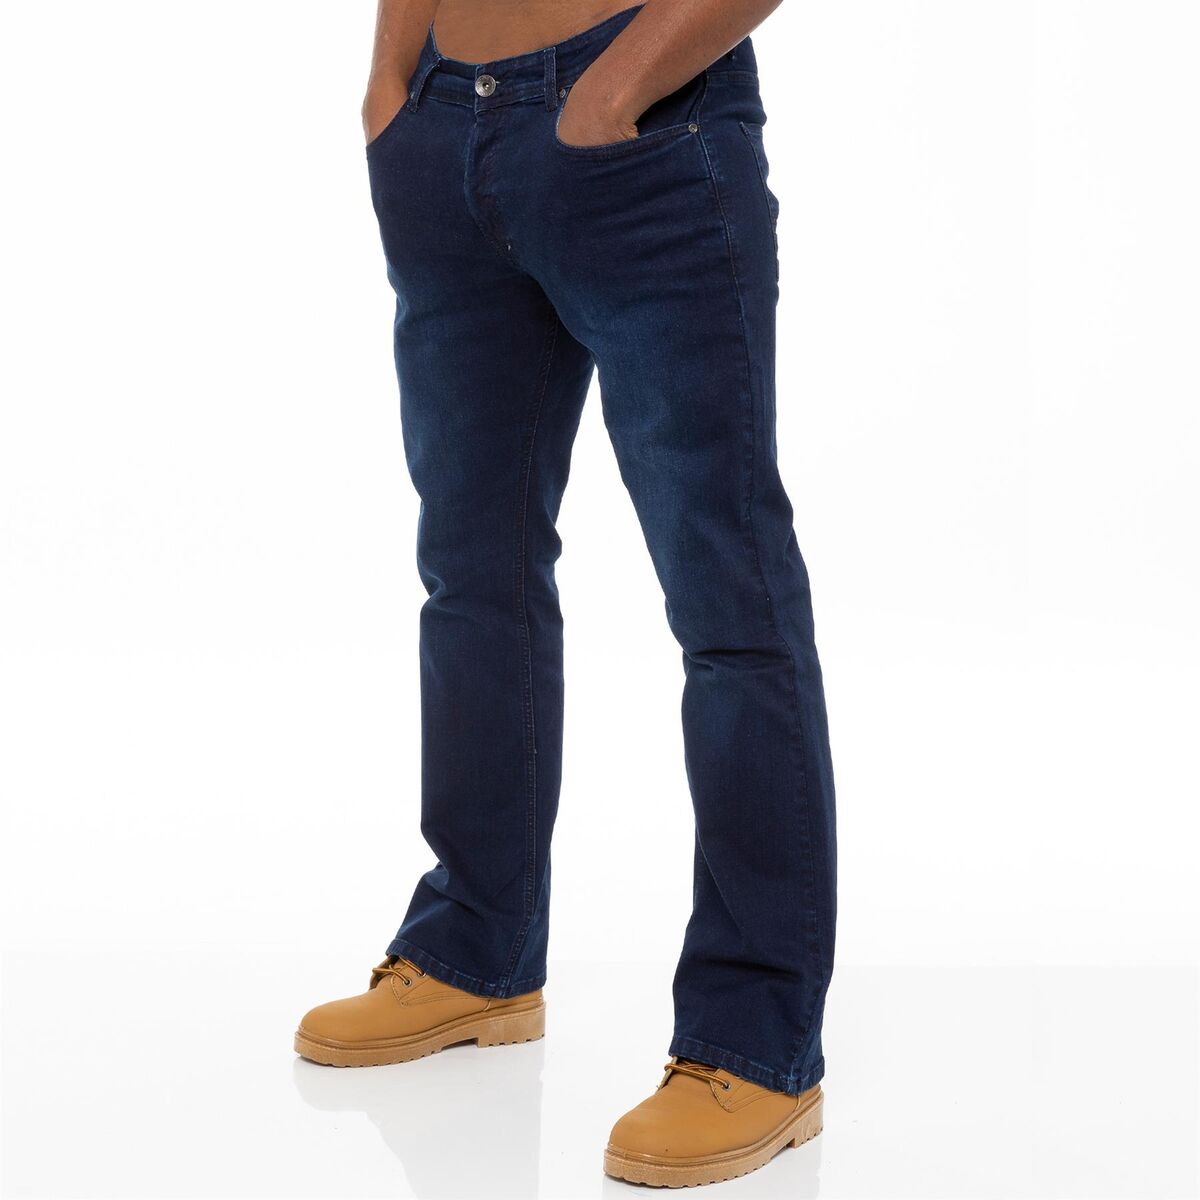 Enzo Bootcut Jeans Mens Wide Stretch UK | Pants Flared All eBay Denim Sizes Leg Trouser